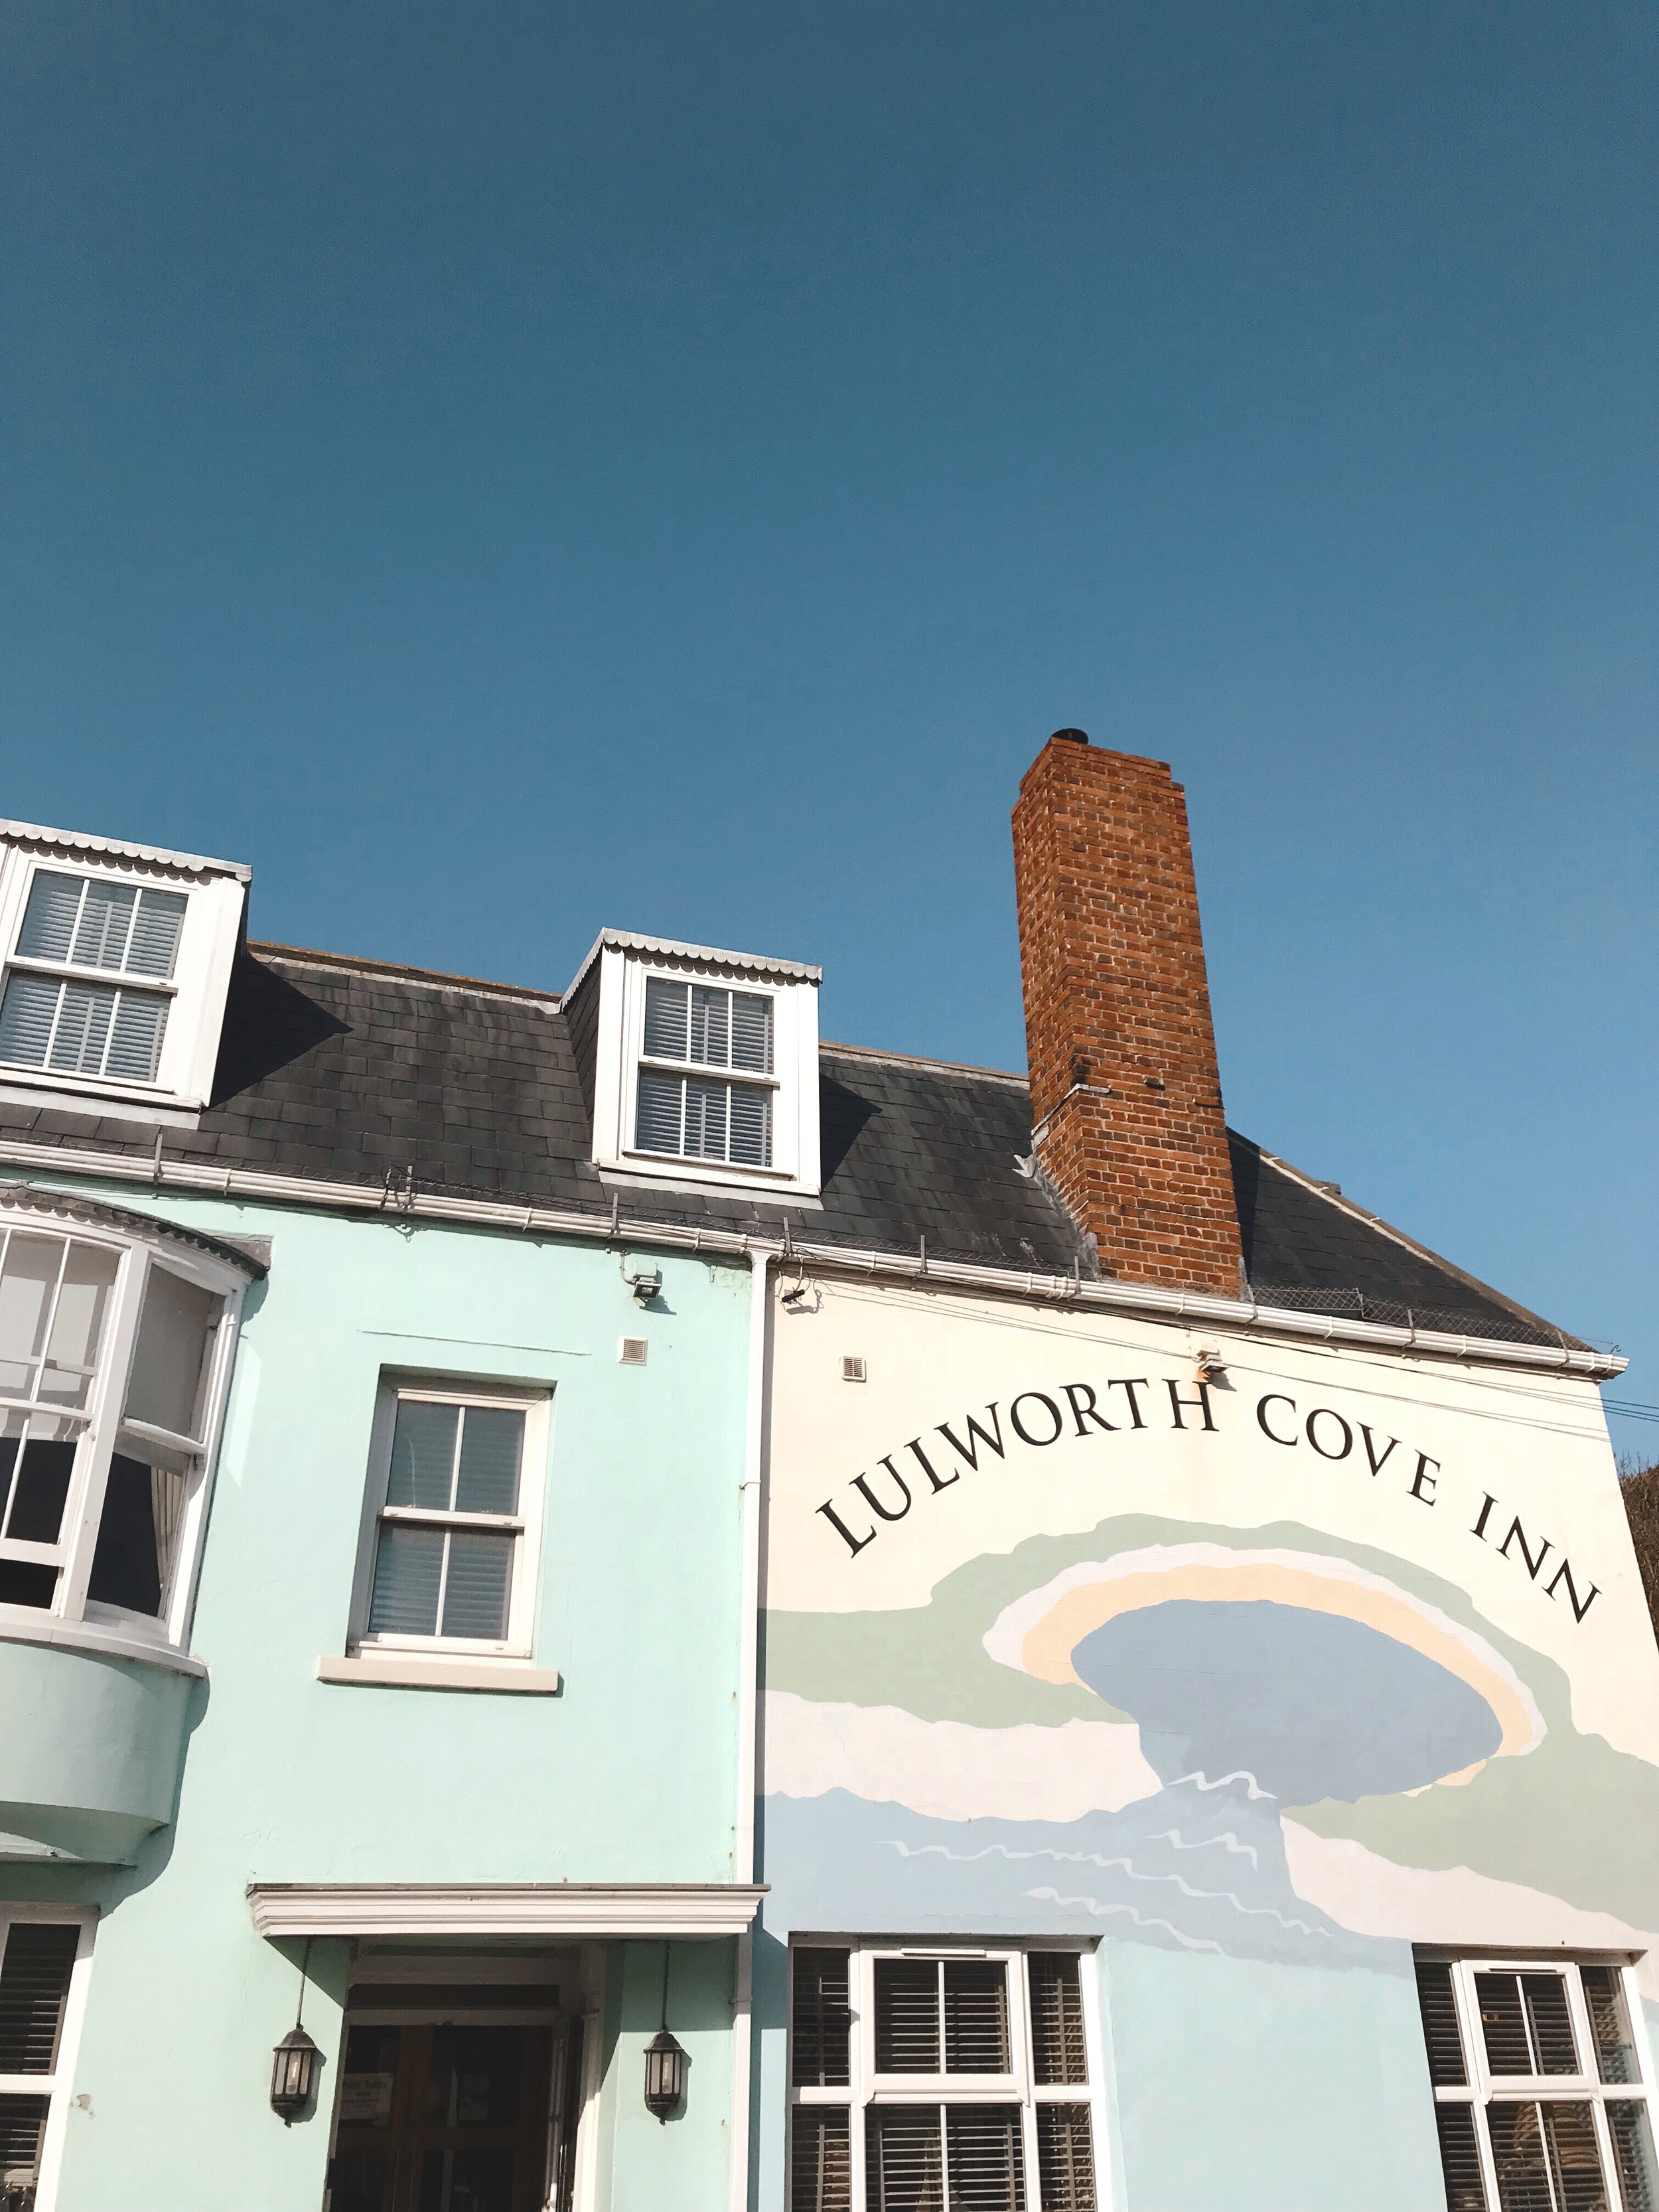 Visiting Lulworth Cove, Dorset